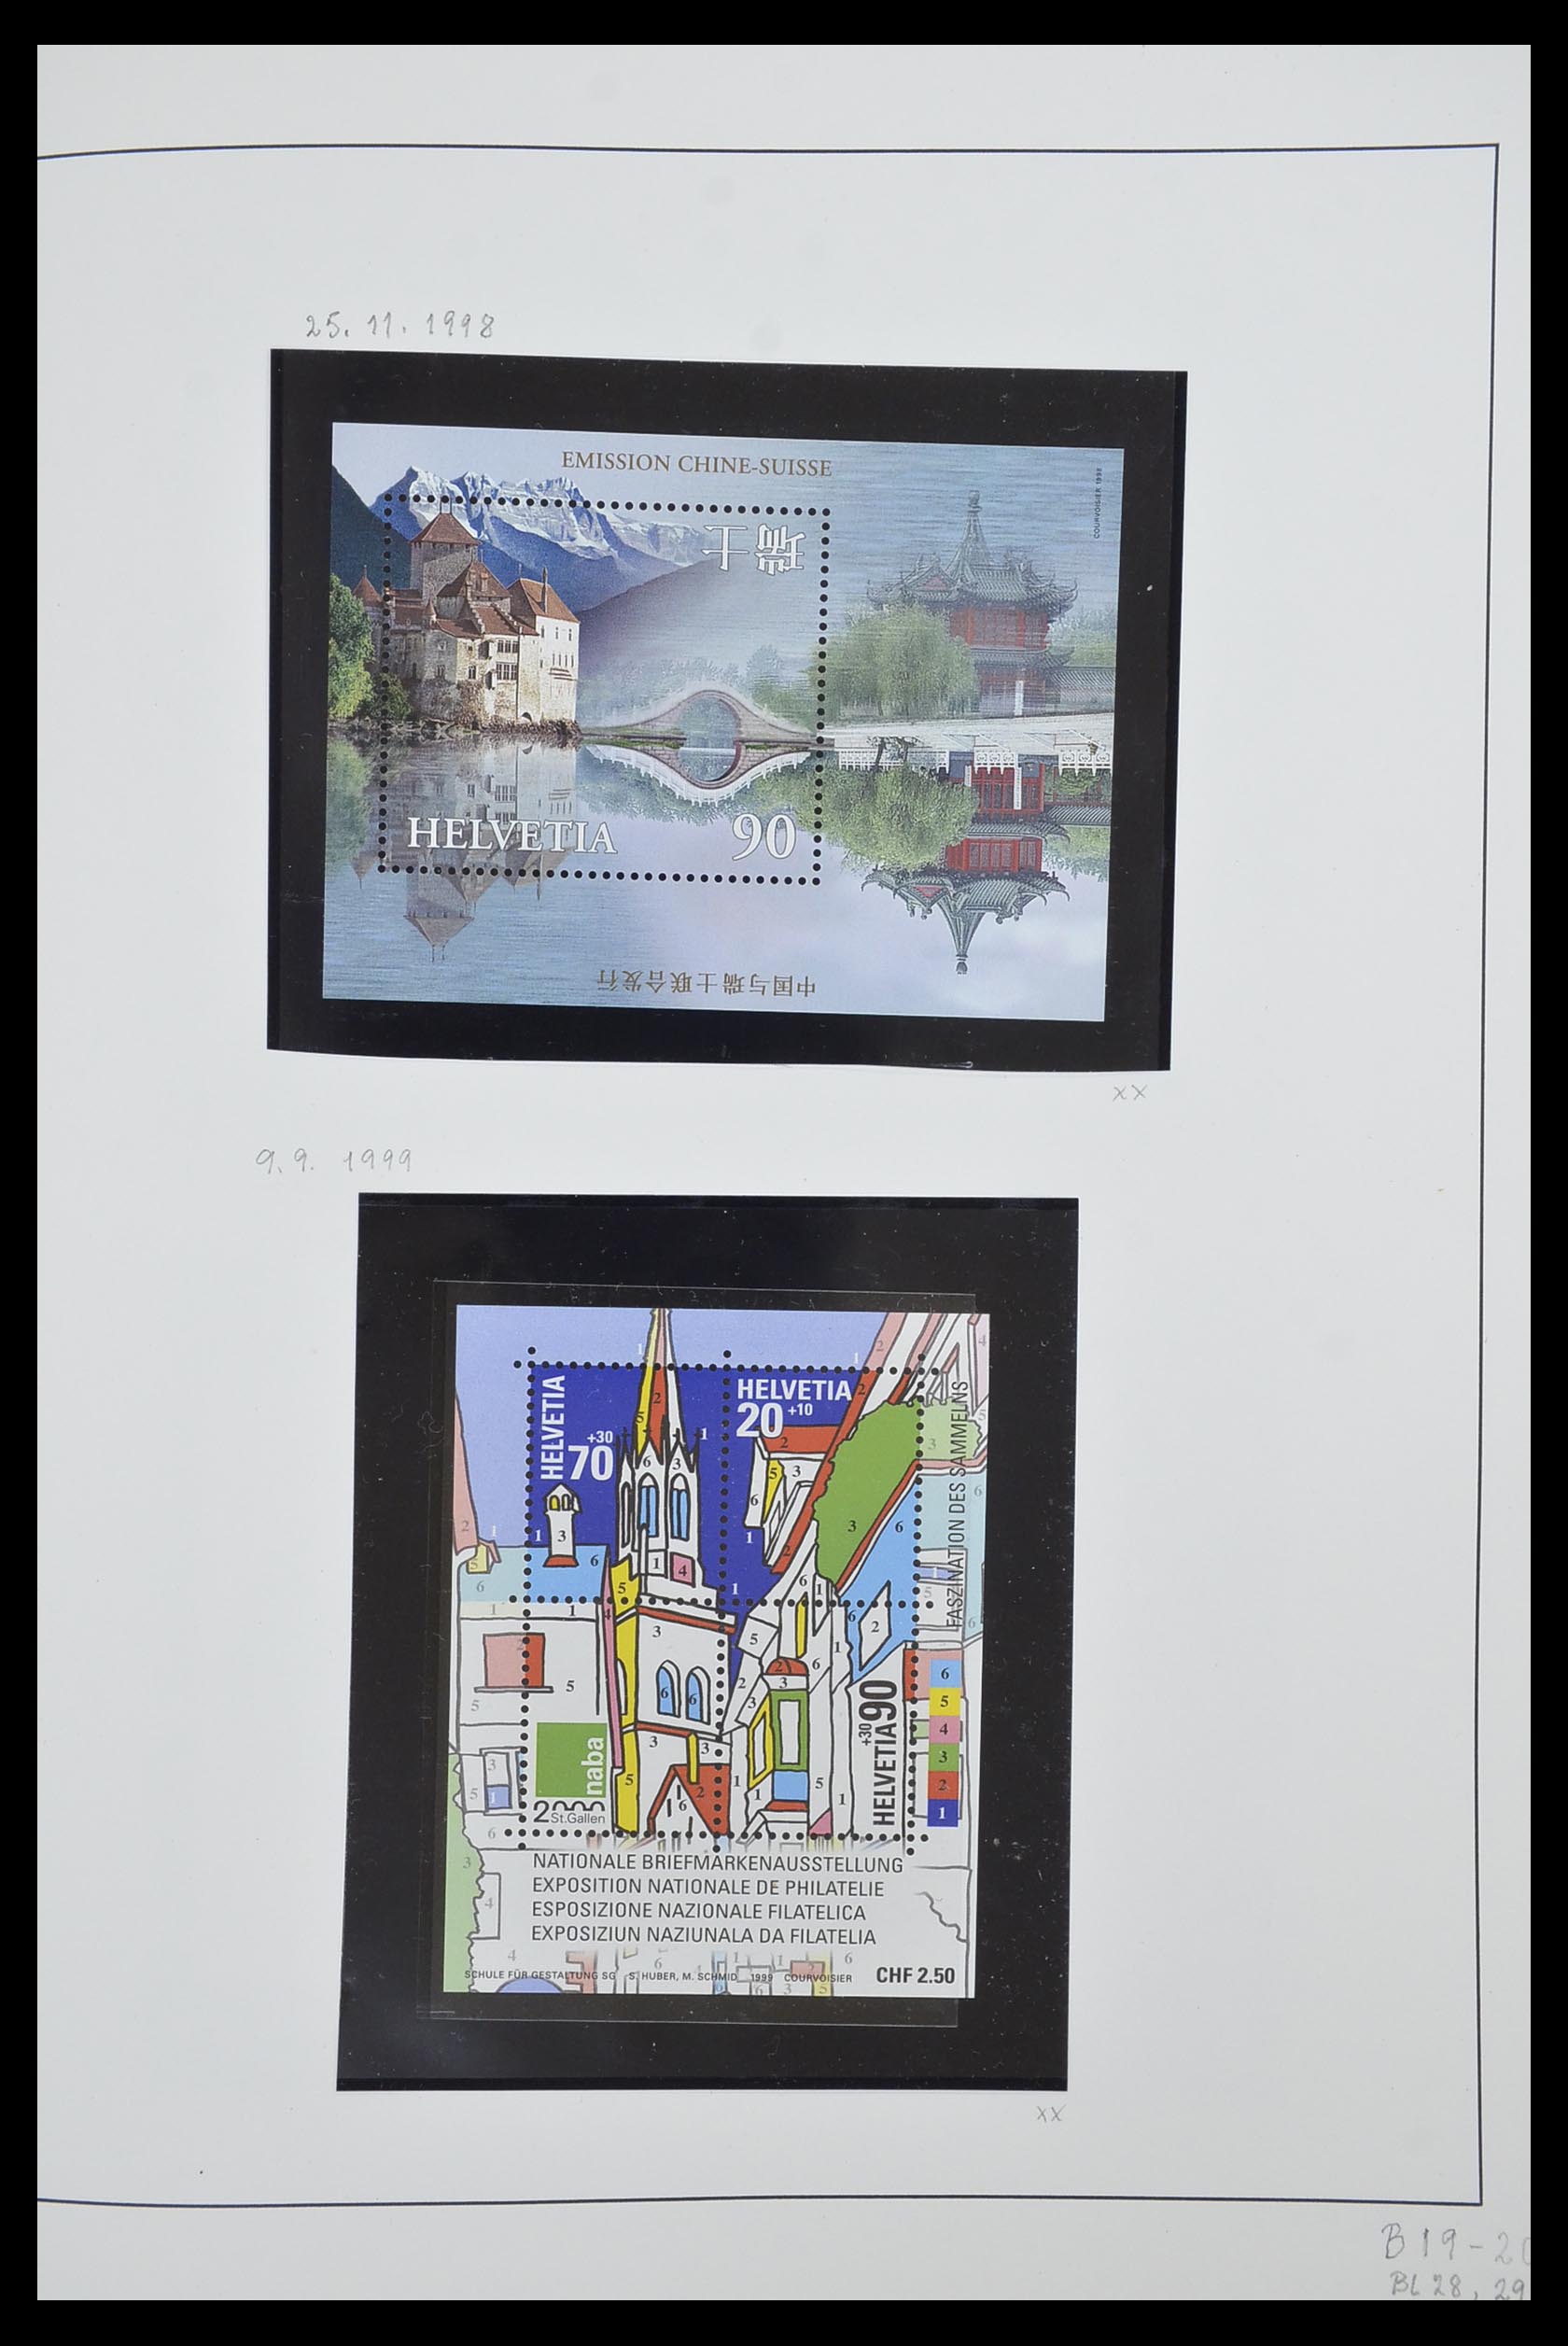 33556 152 - Stamp collection 33556 Switzerland 1862-2000.